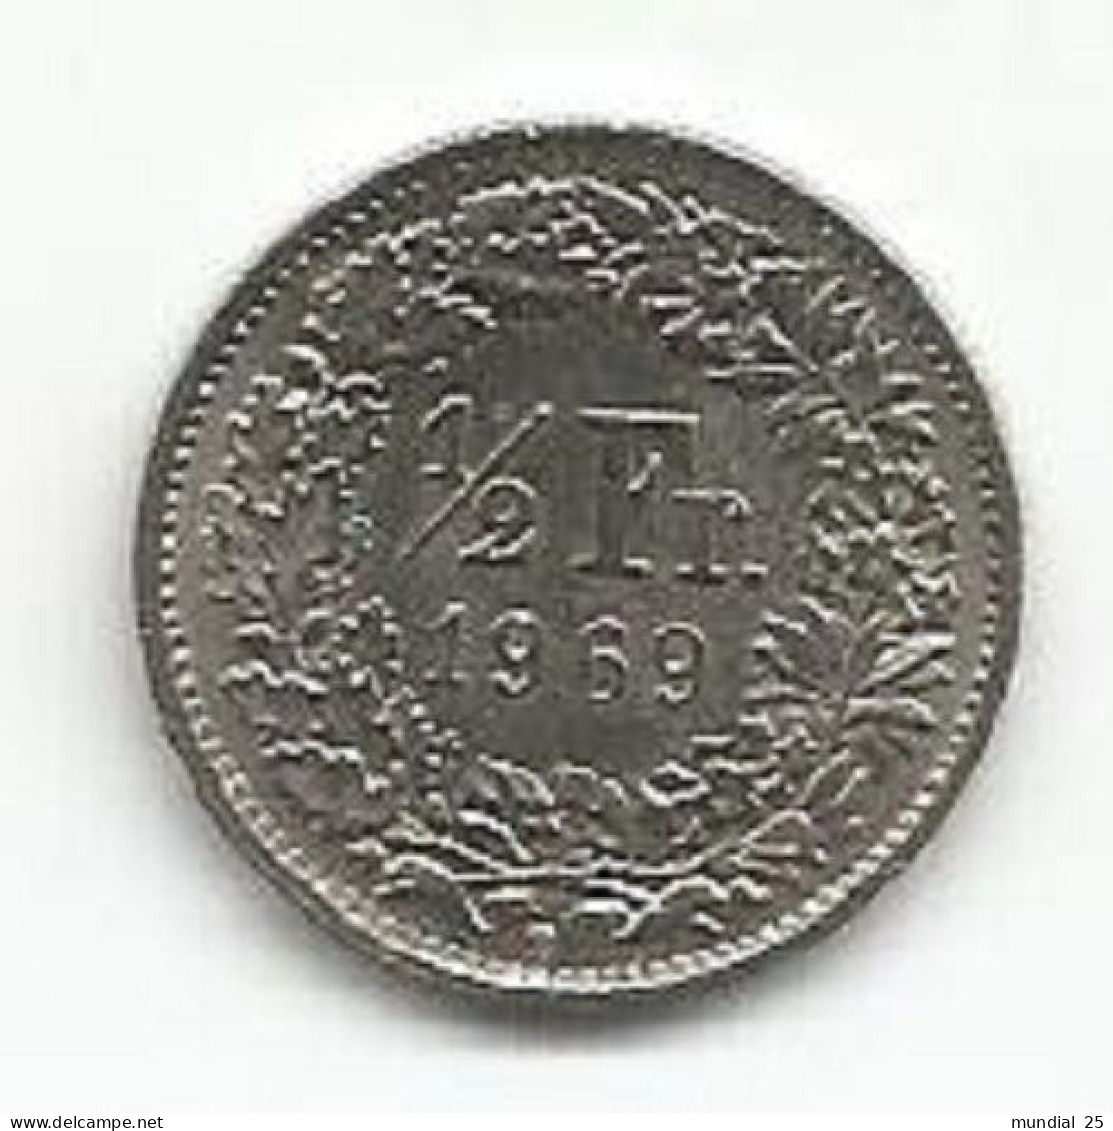 SWITZERLAND 1/2 FRANC 1969 B - 1/2 Franc